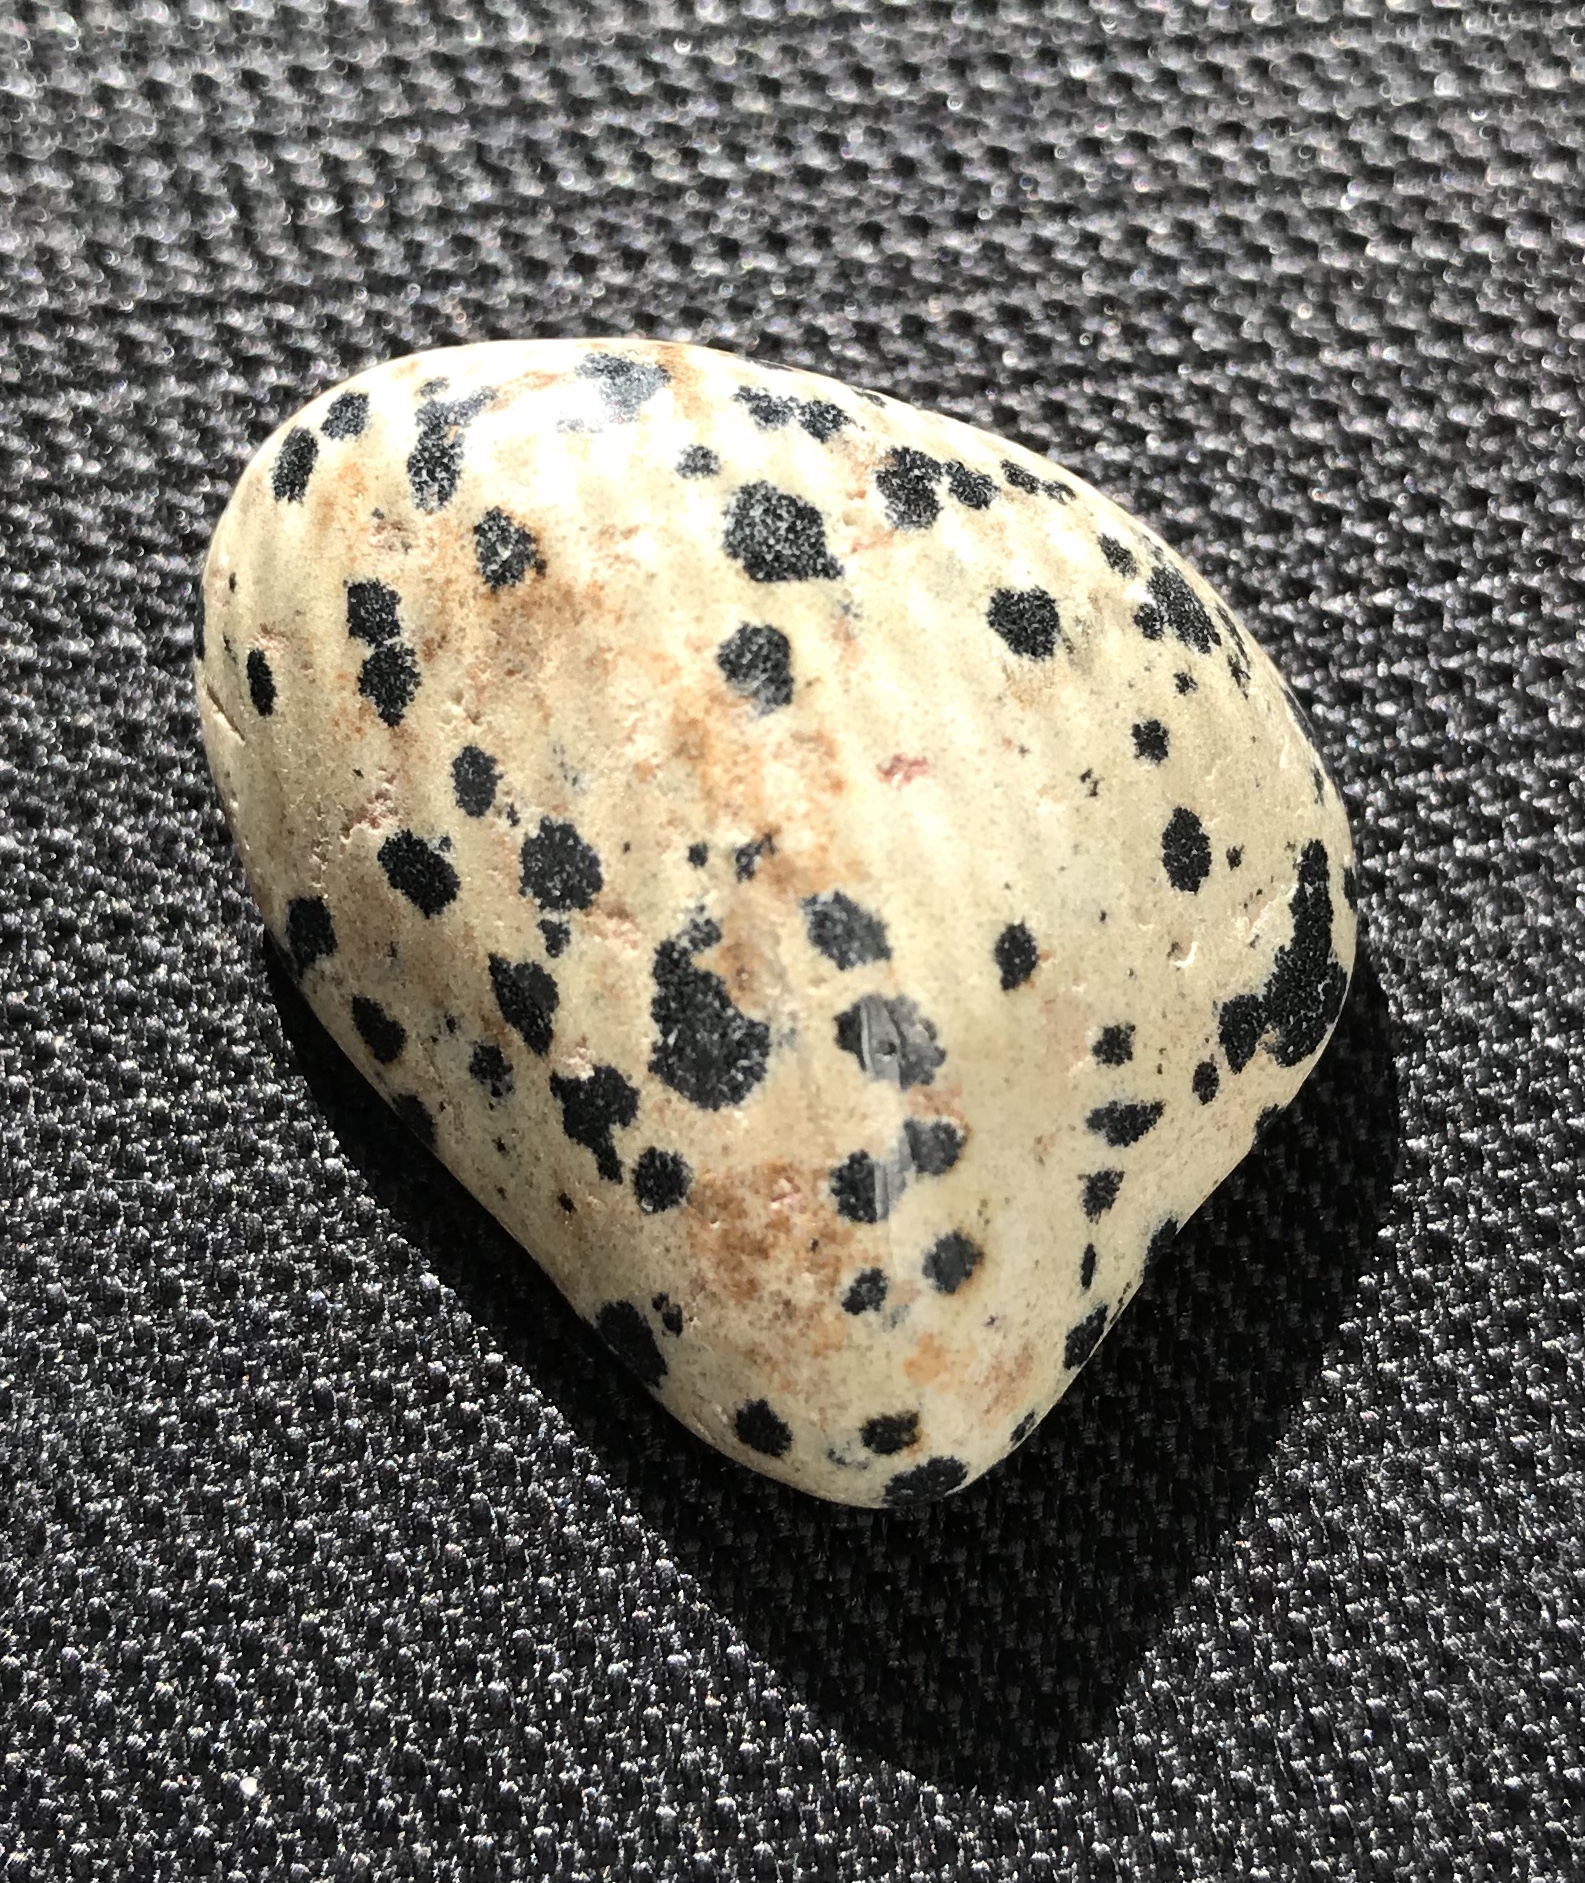 dalmation stone - beige with black spots